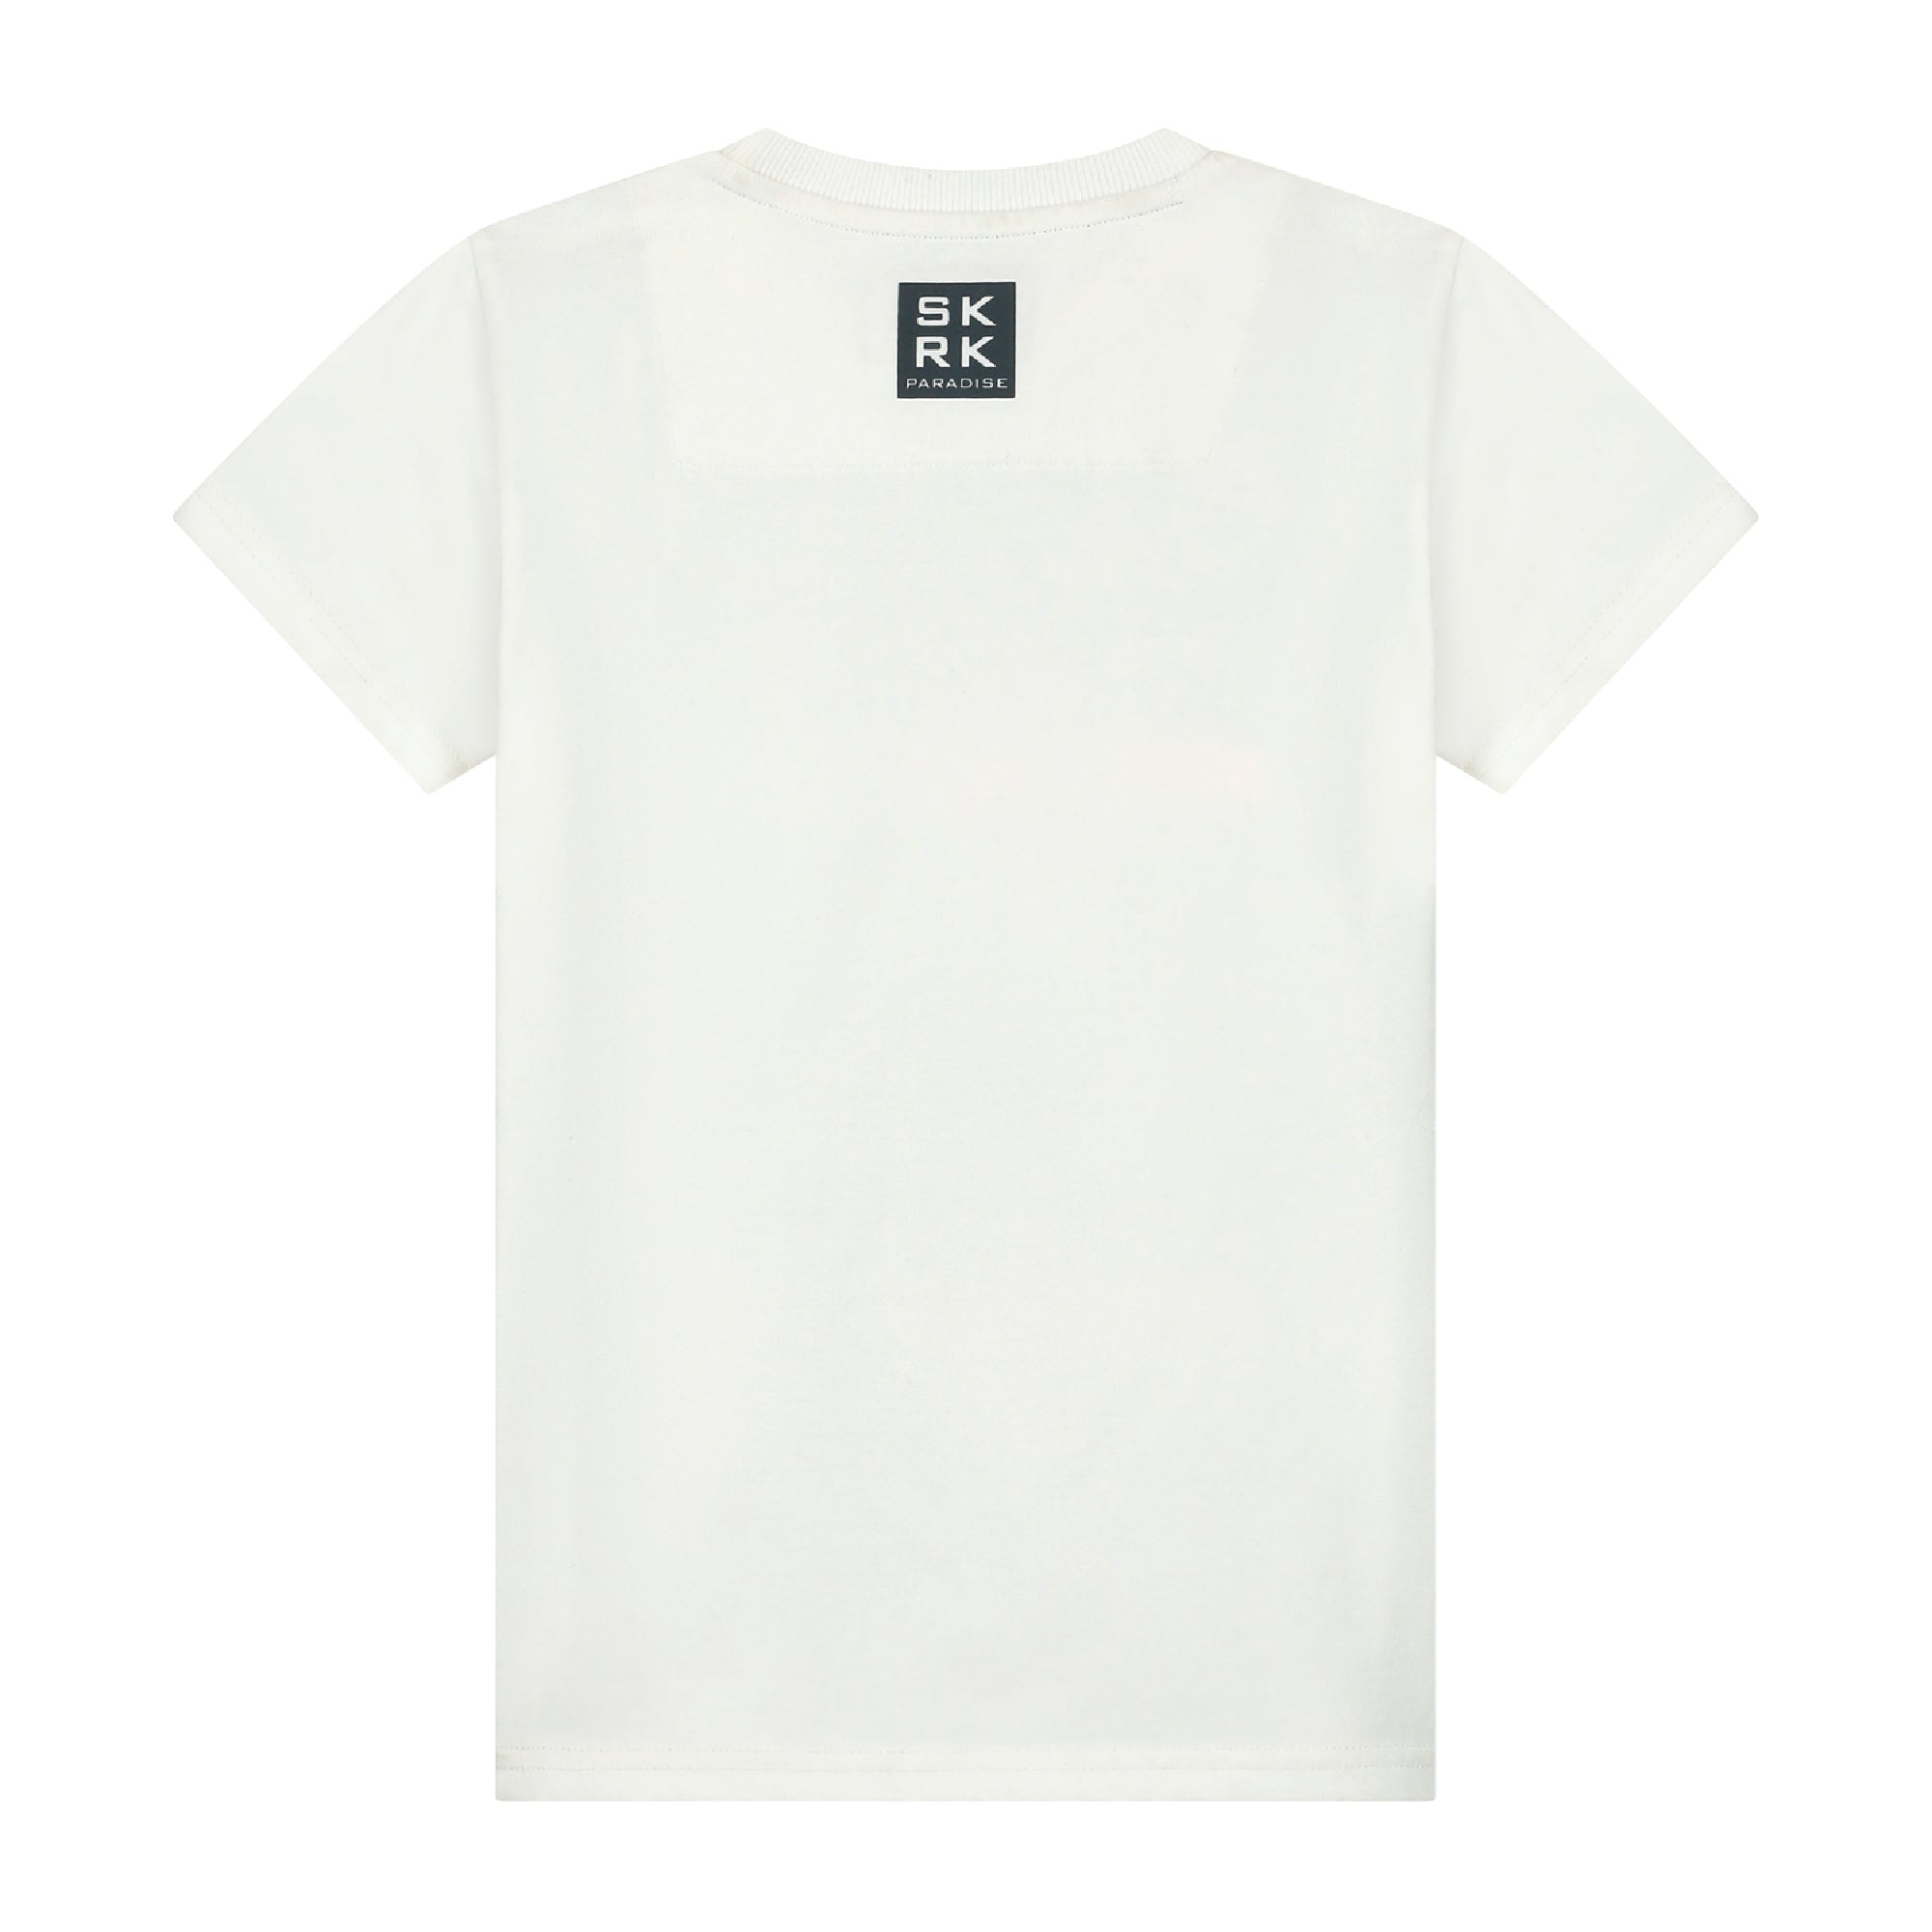 Skurk T-shirt Tesly White